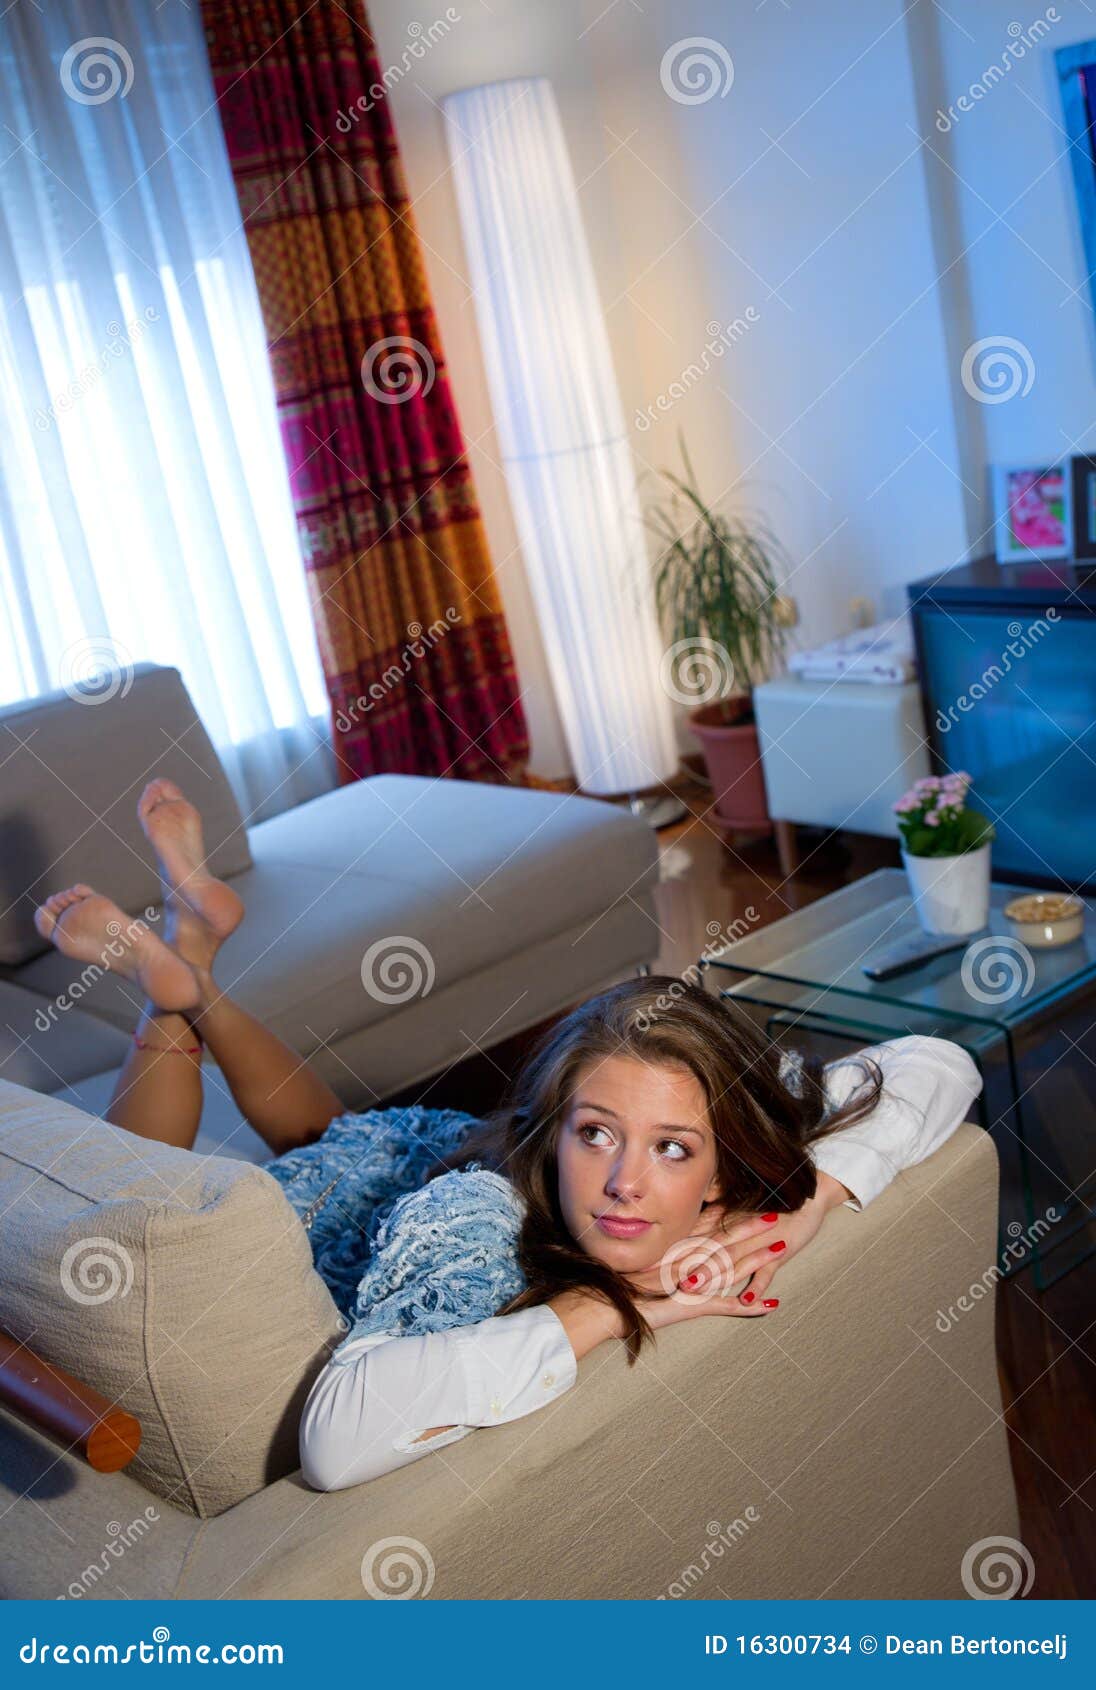 Nice Teen On Couch - Teen girl on the sofa stock photo. Image of girl, adult - 16300734